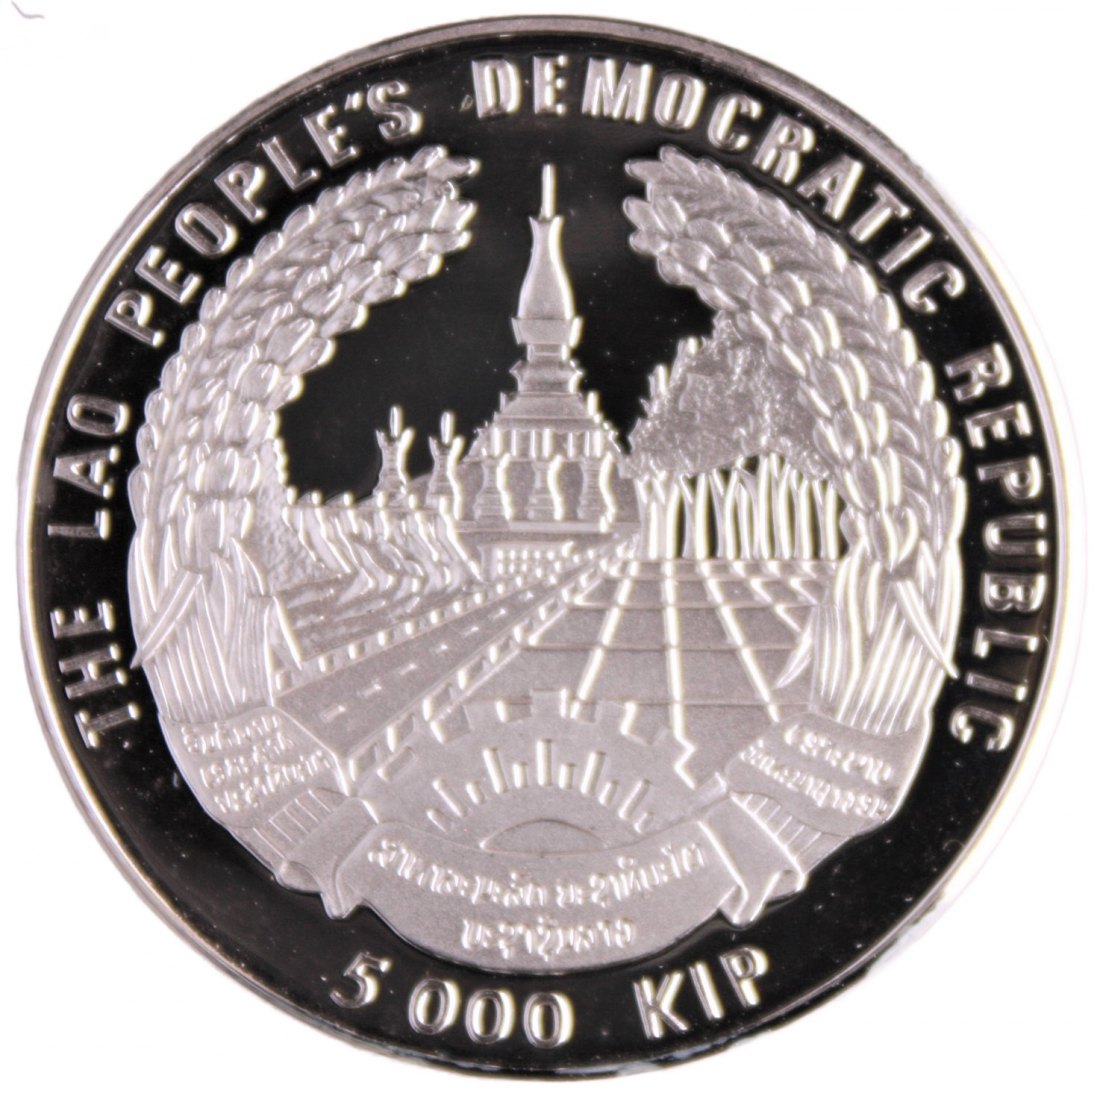  Laos: 5000 Kip 2000, Millennium, 15,14 gr. Feinsilber, hoher Katalogpreis!!   